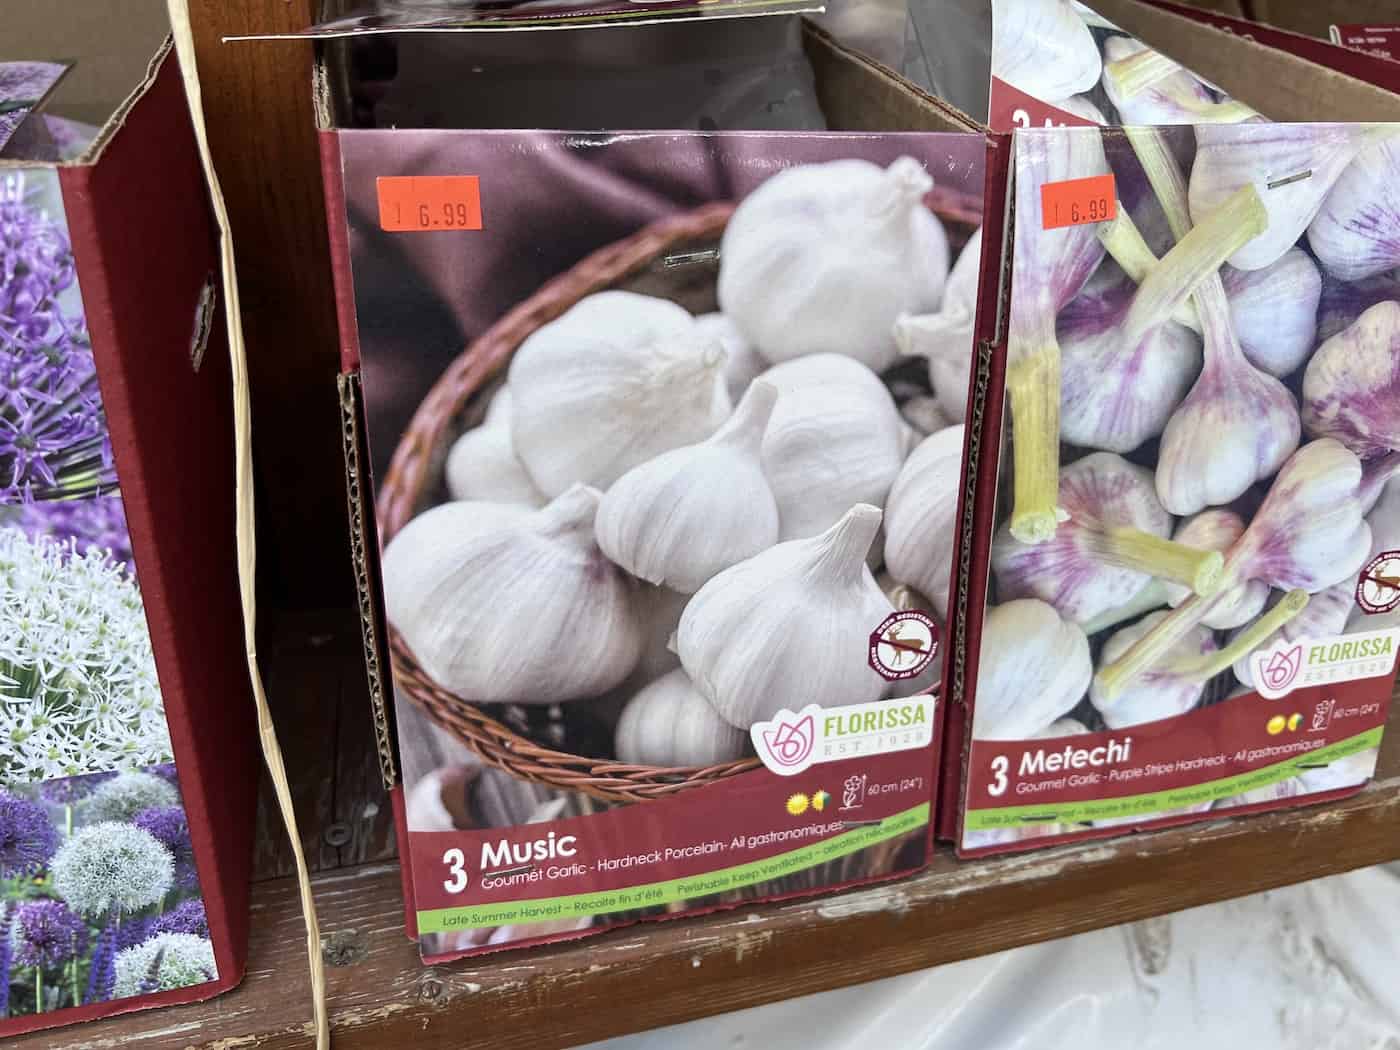 Buying music garlic bulbs for planting